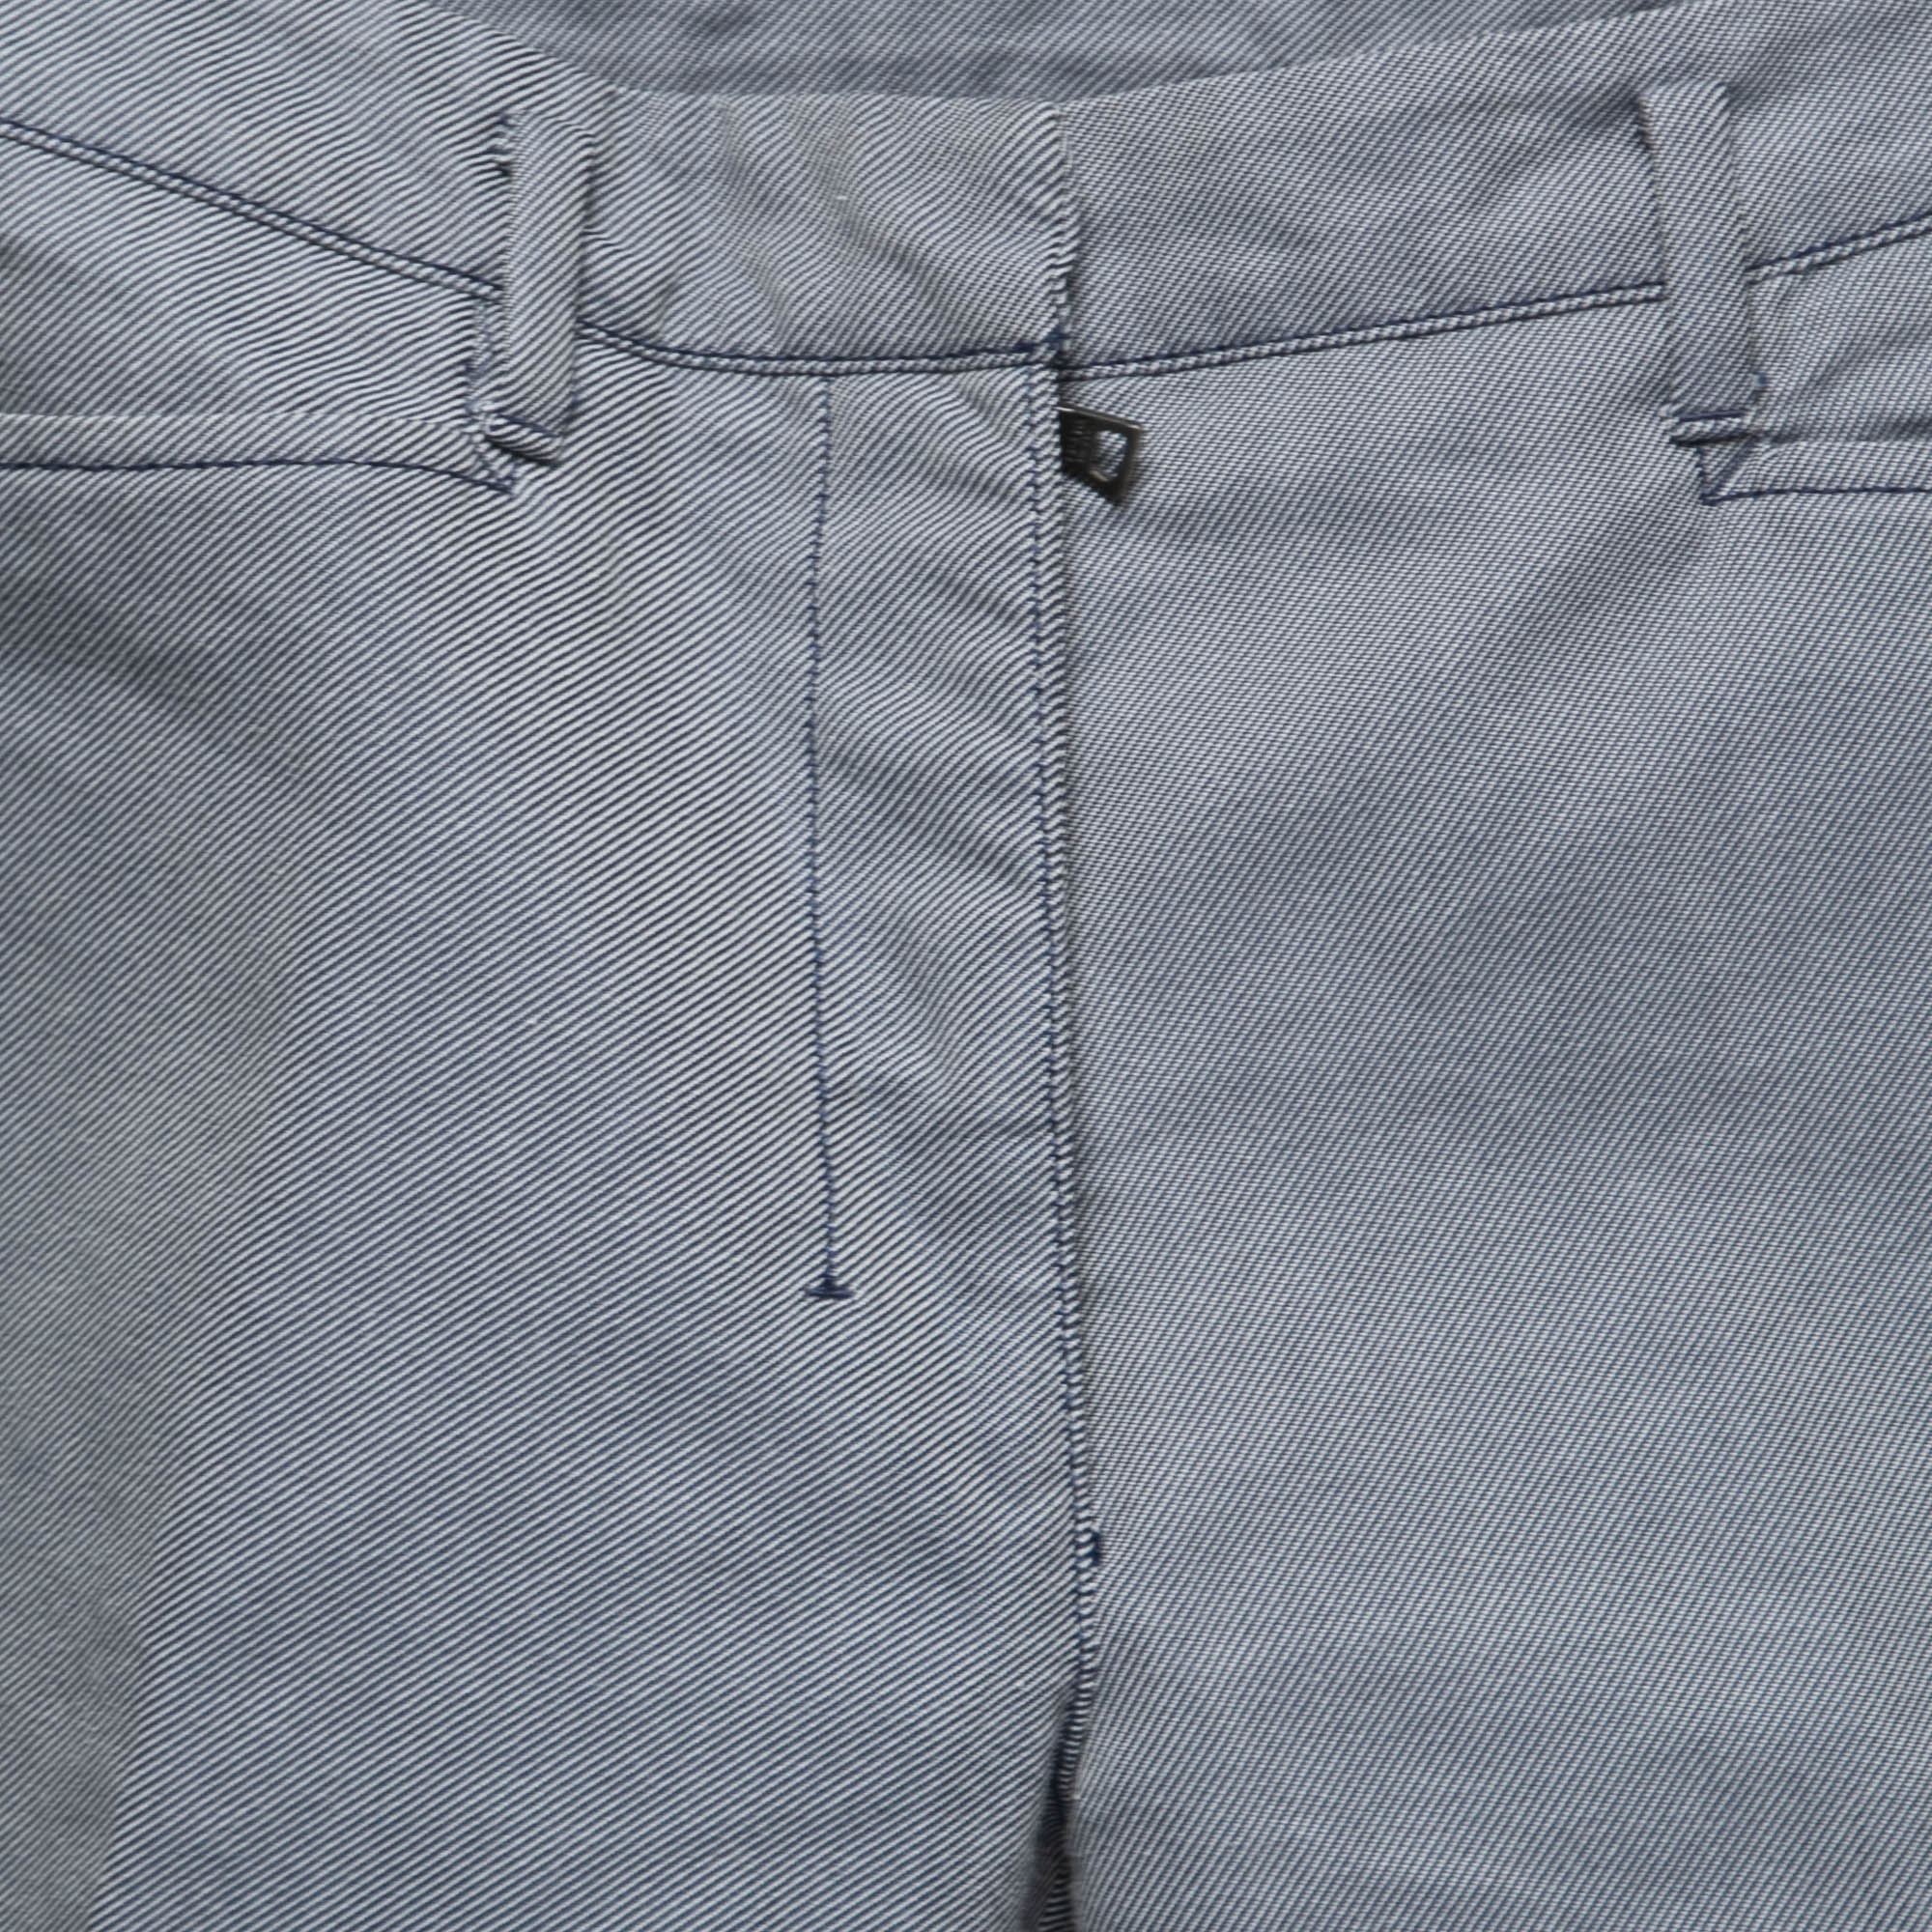 Prada Sport Navy Blue Striped Cotton Straight Leg Pants S